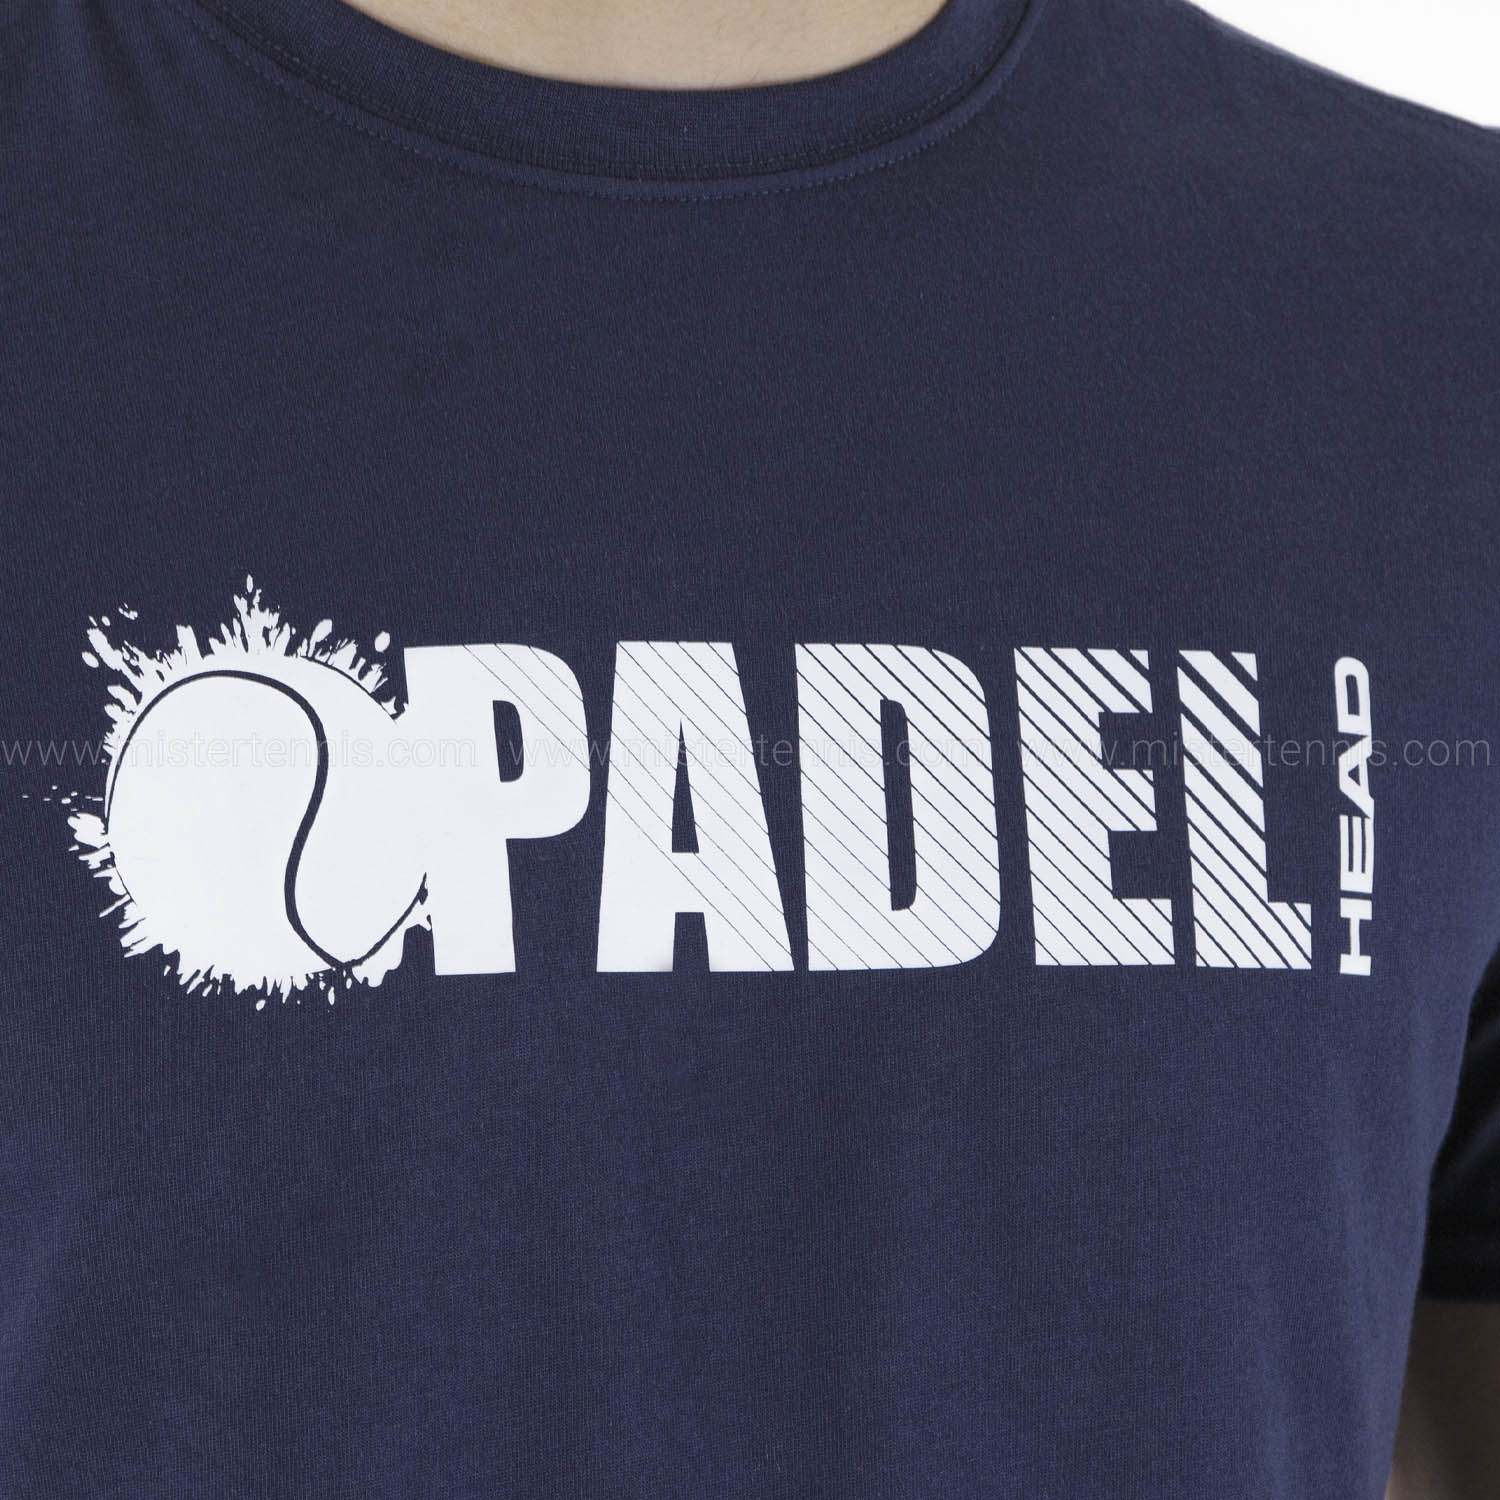 Head Padel Vision Camiseta - Dark Blue